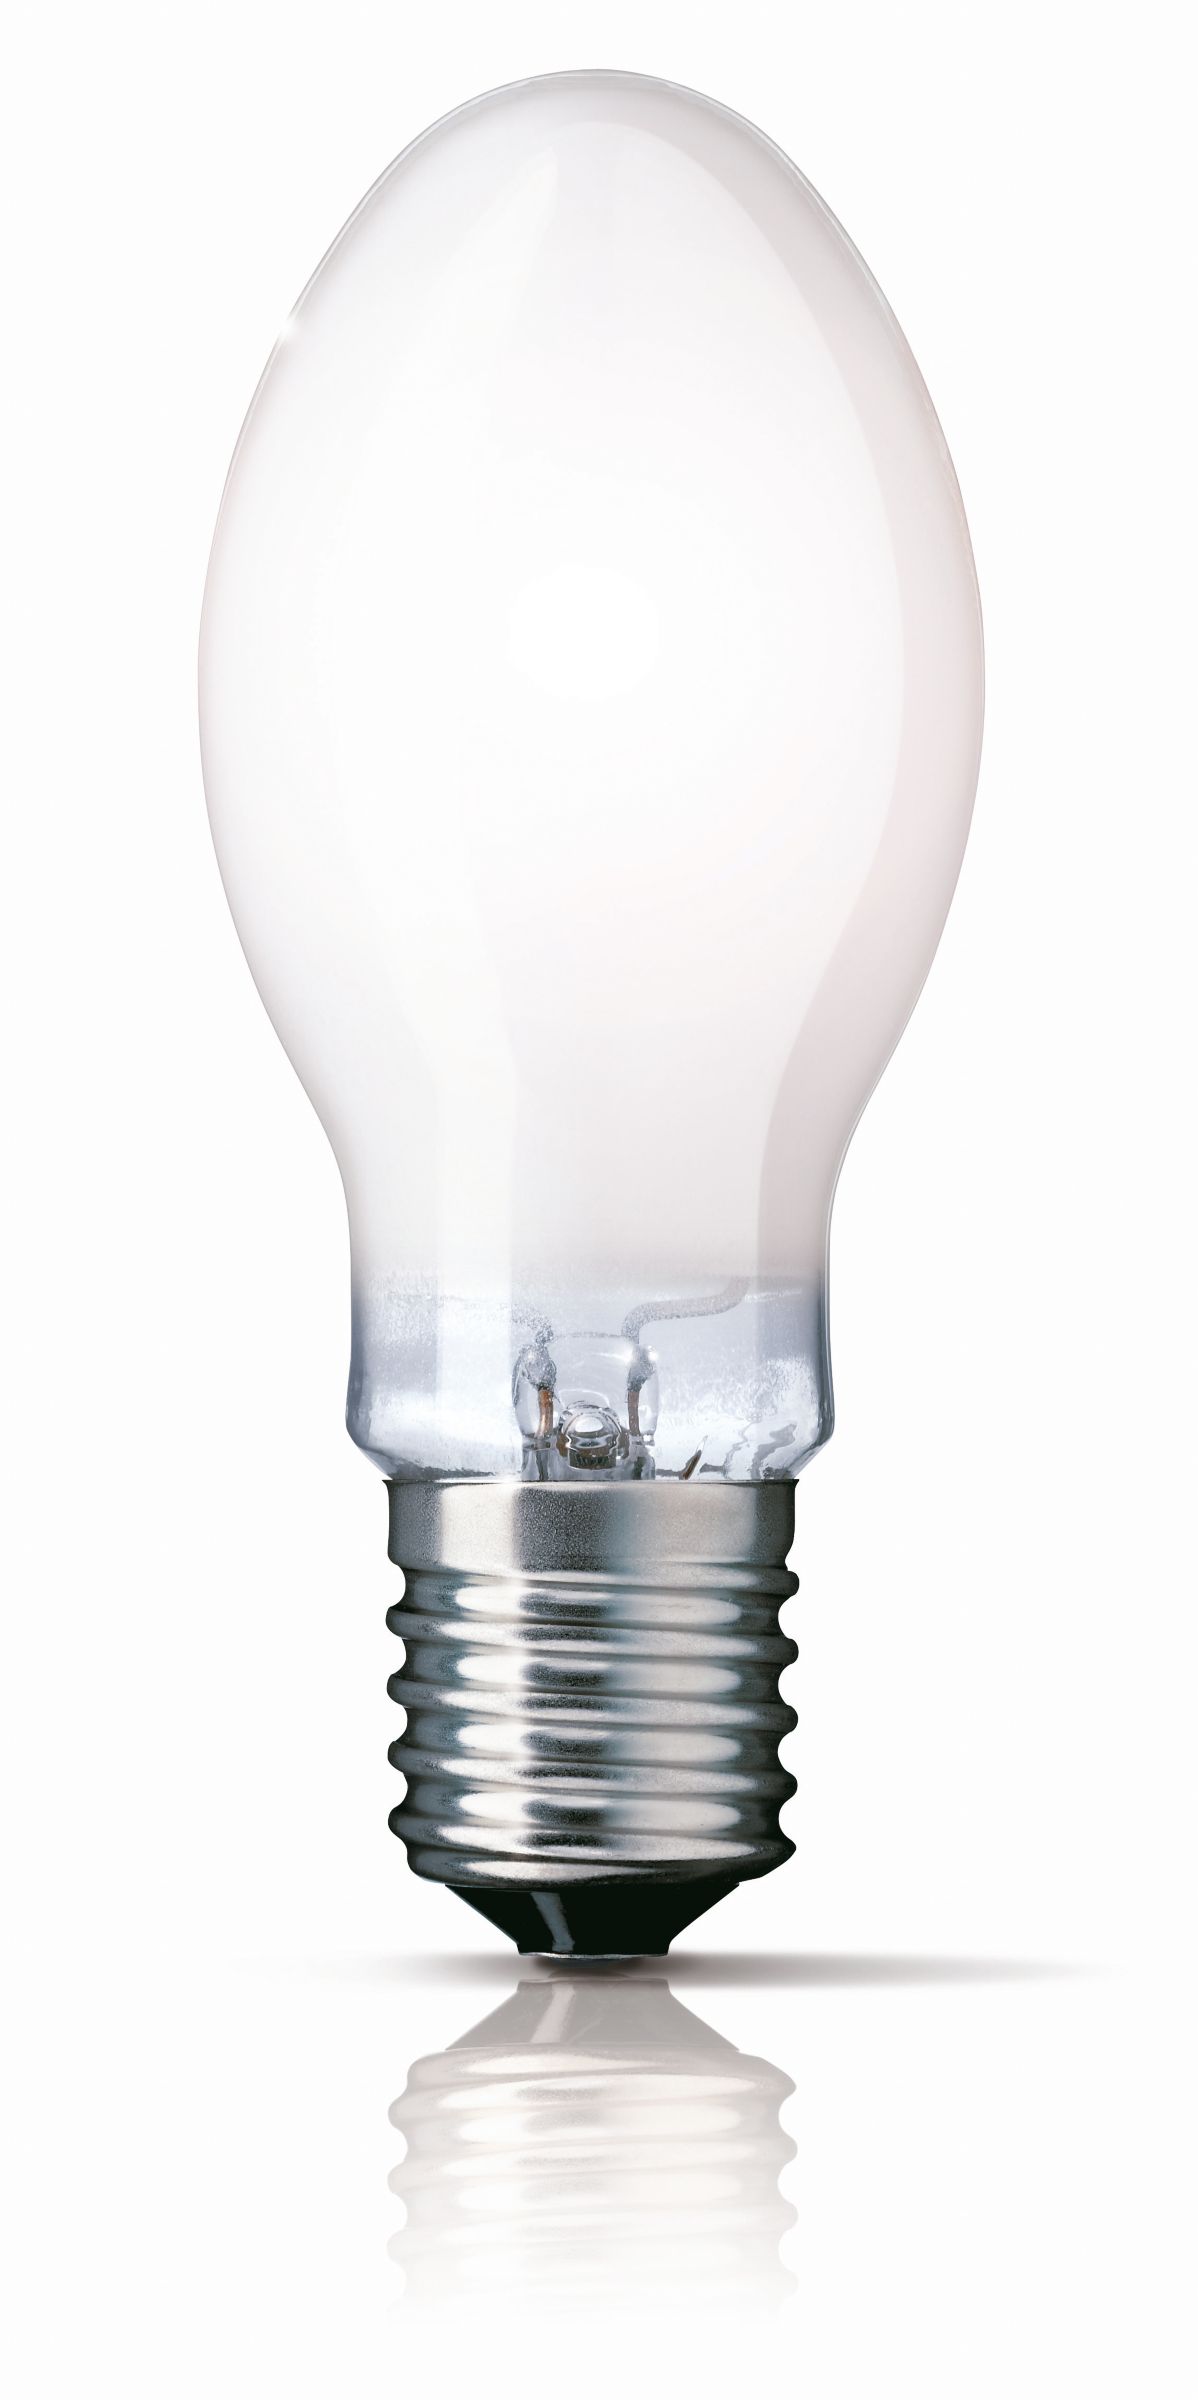 Philips SON PIA 400 Watt Plus HG Free E40 Natriumdampflampe 400W Lampe Leuchte 